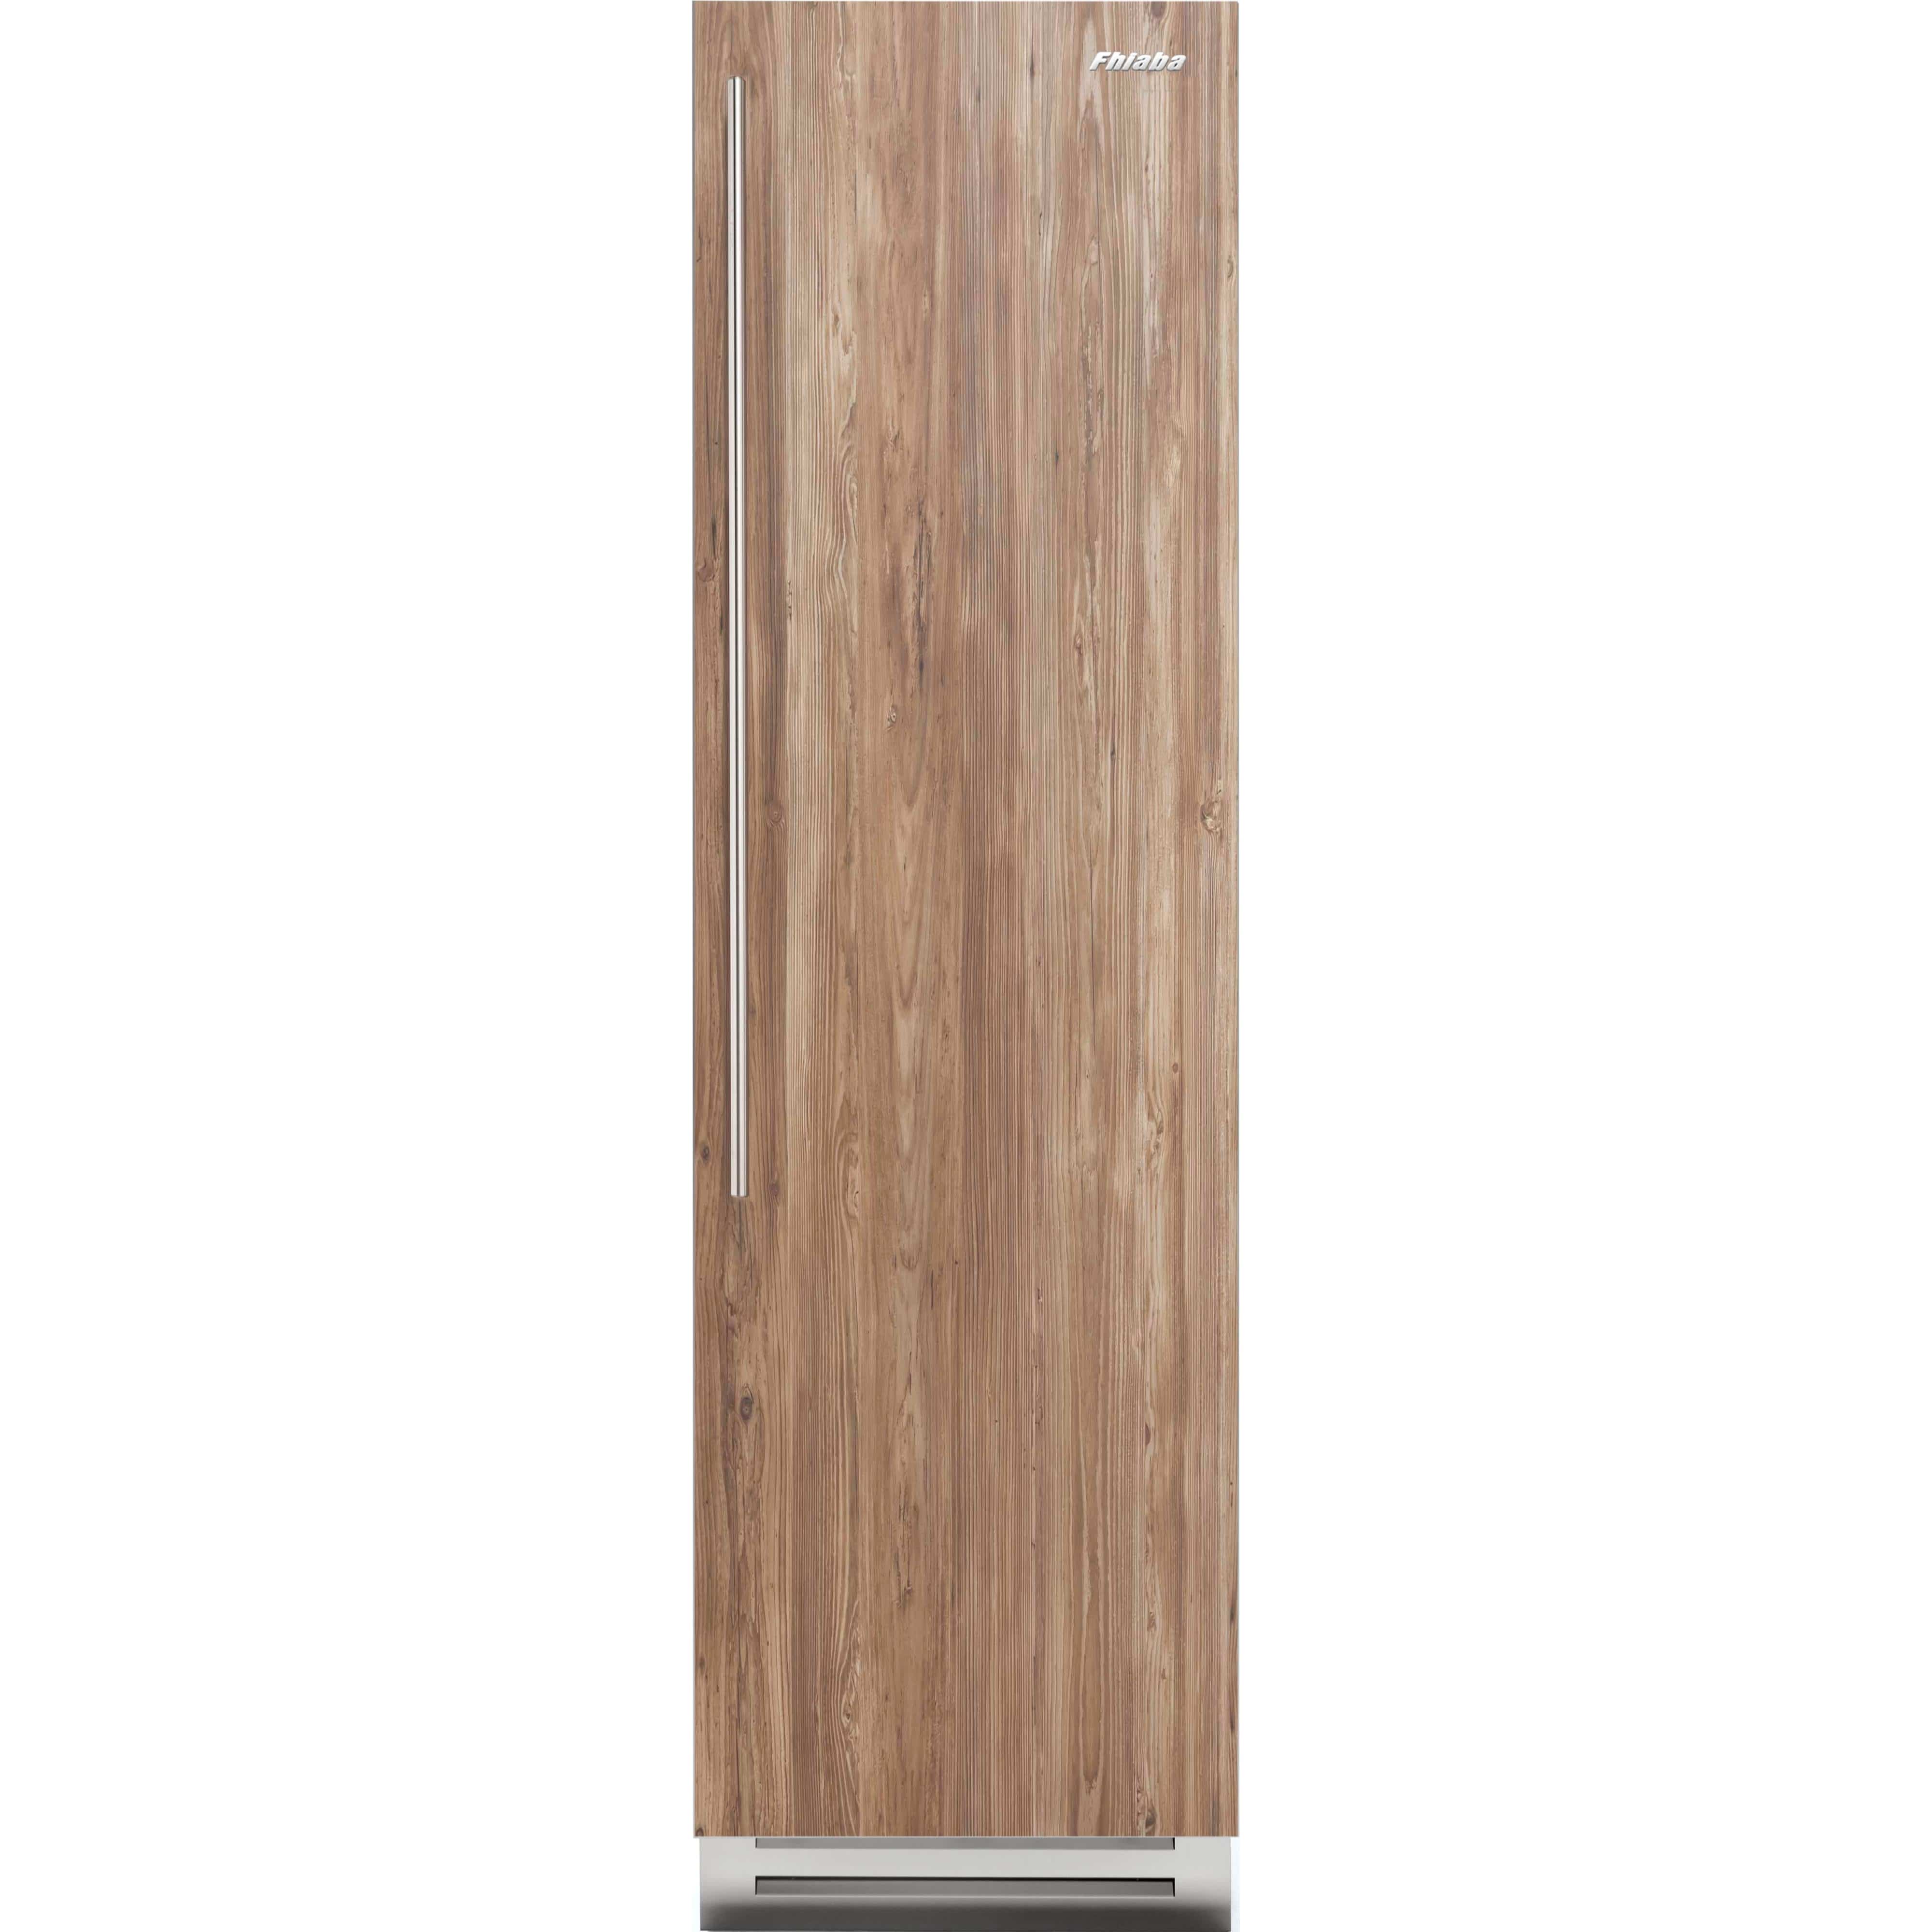 Fhiaba 12.67 cu. ft. Upright Freezer with Smart Touch TFT Display FI24FZC-RO2 Freezers FI24FZCRO2 Luxury Appliances Direct